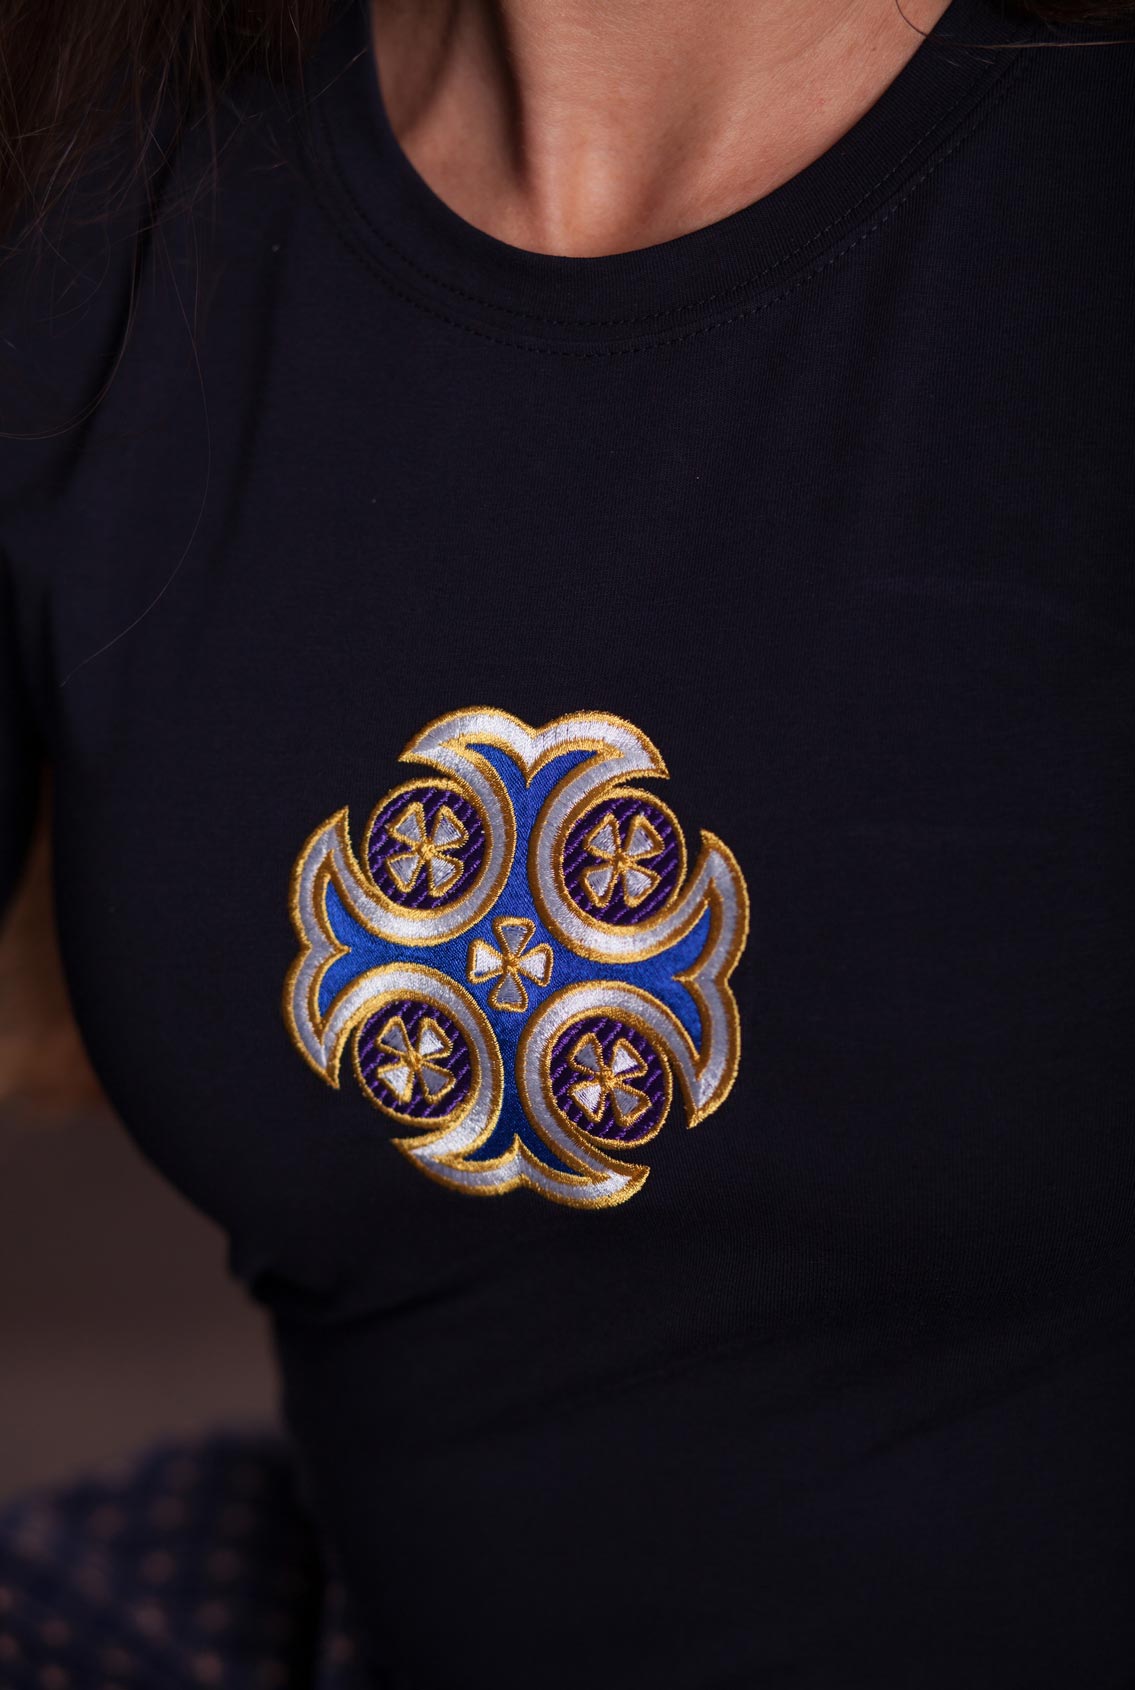 женская футболка с крестом, women's t-shirt with a cross